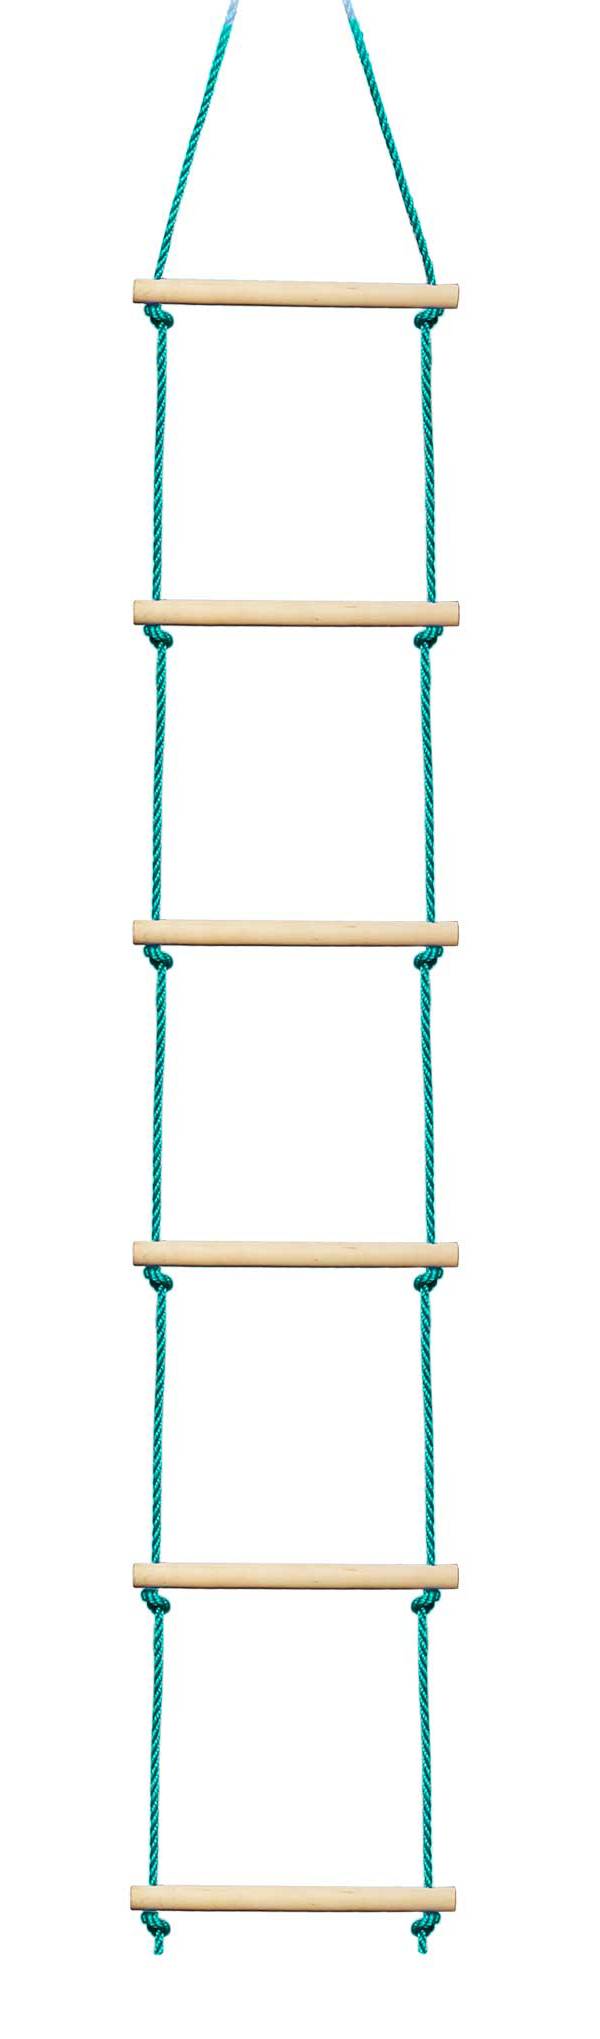 Slackers Ninja 8' Ladder Obstacle